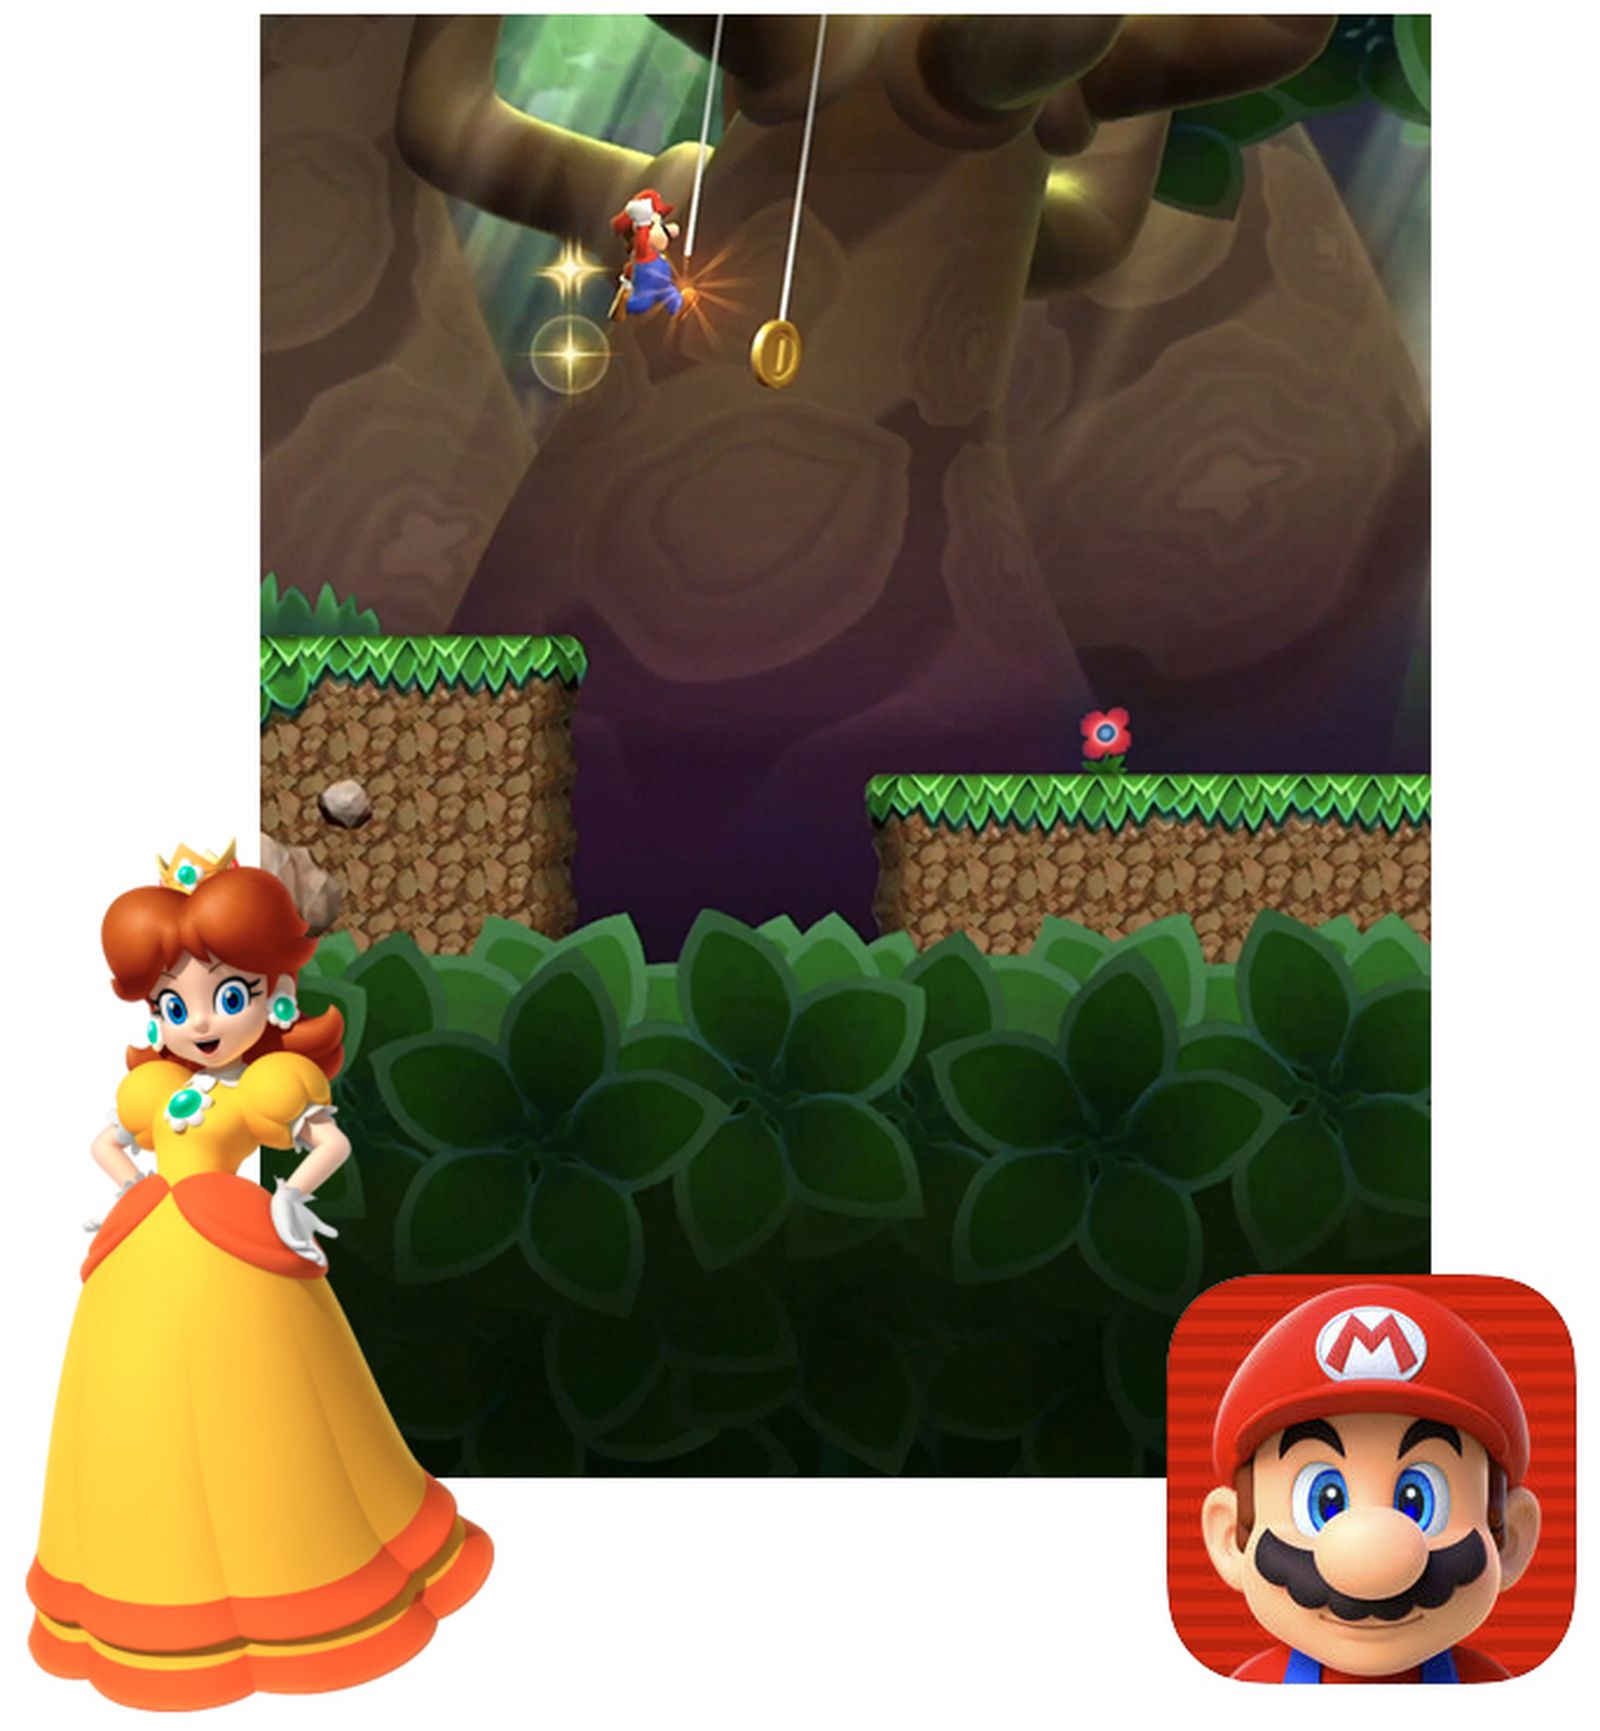 Super Mario Run: Price, gameplay and more - CNET